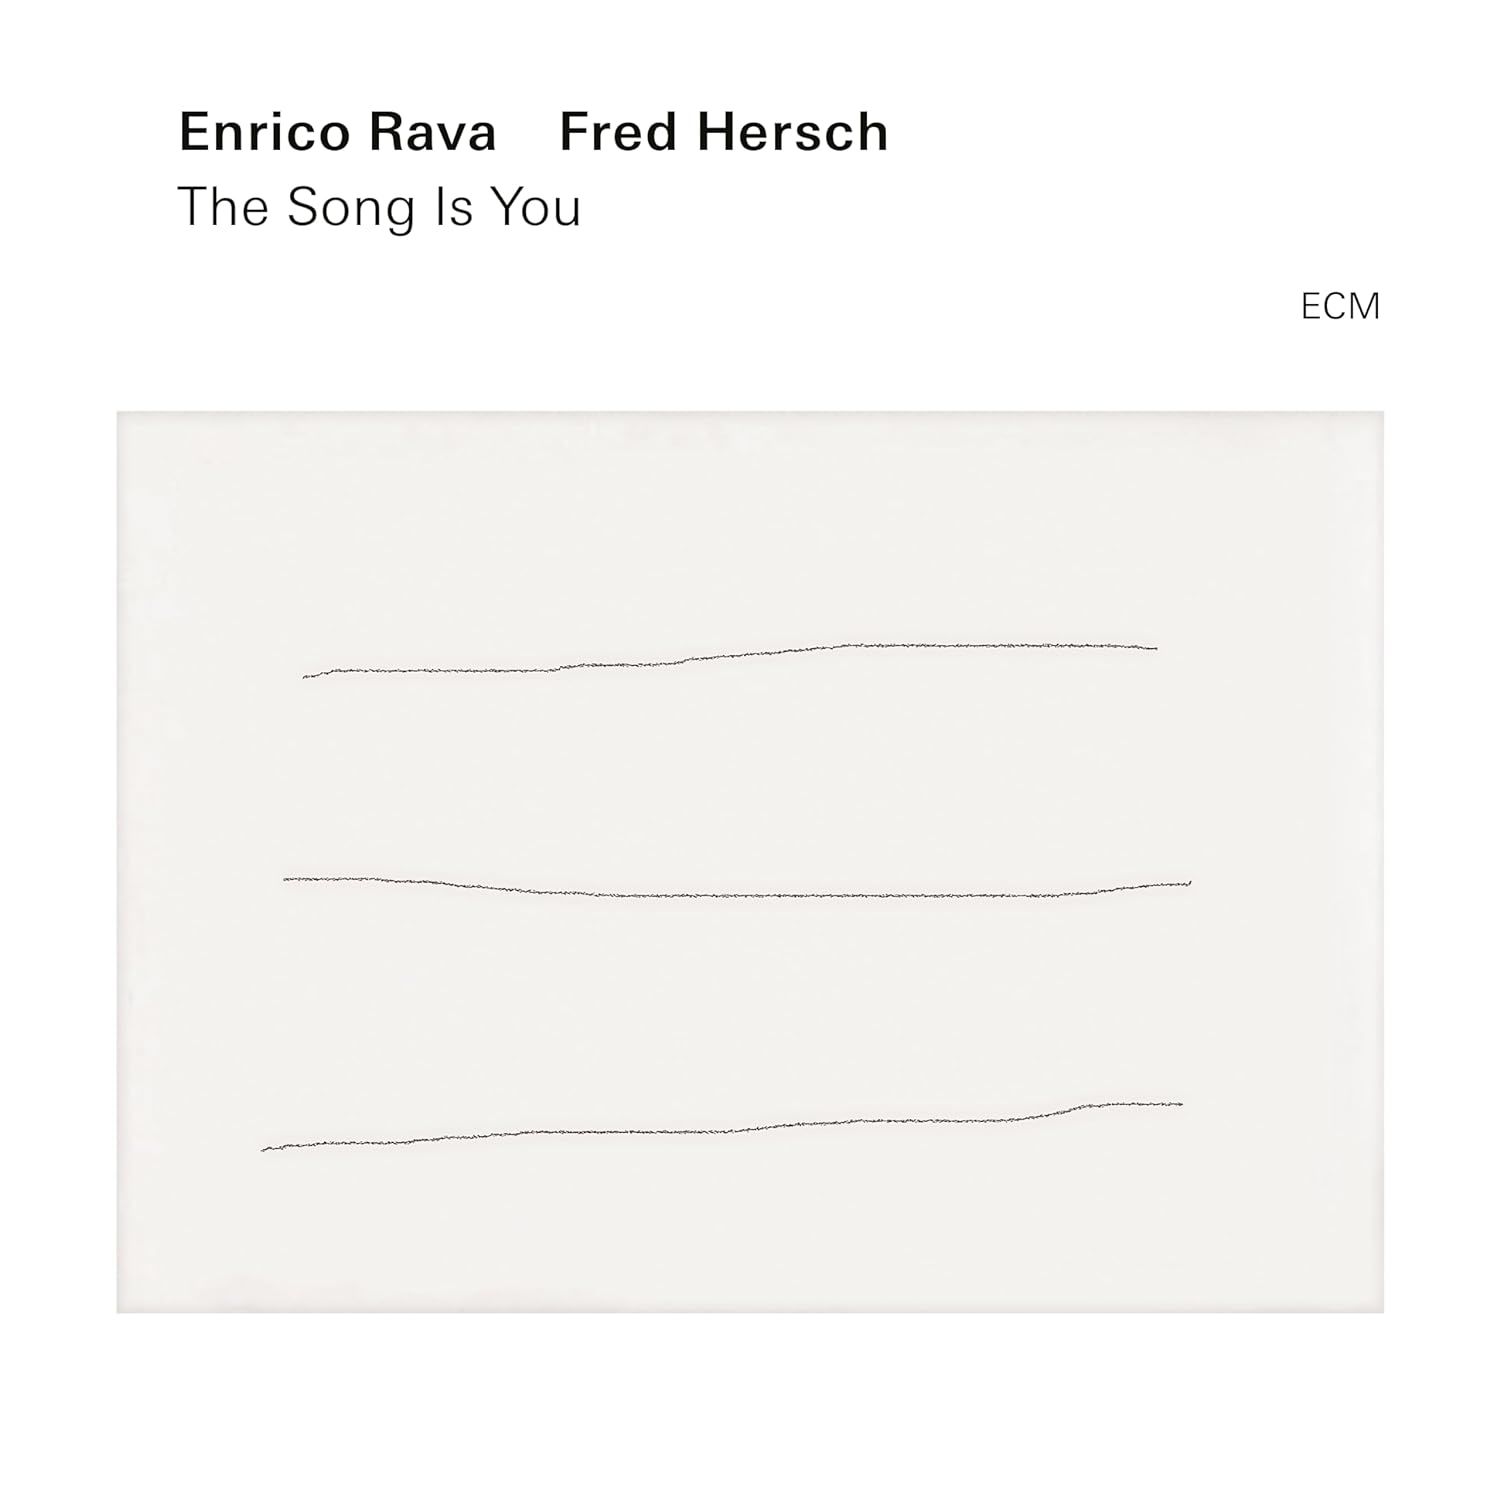 ENRICO RAVA FRED HERSCH - THE SONG IS YOU (2022) - LP ECM RECORDS SIFIR PLAK